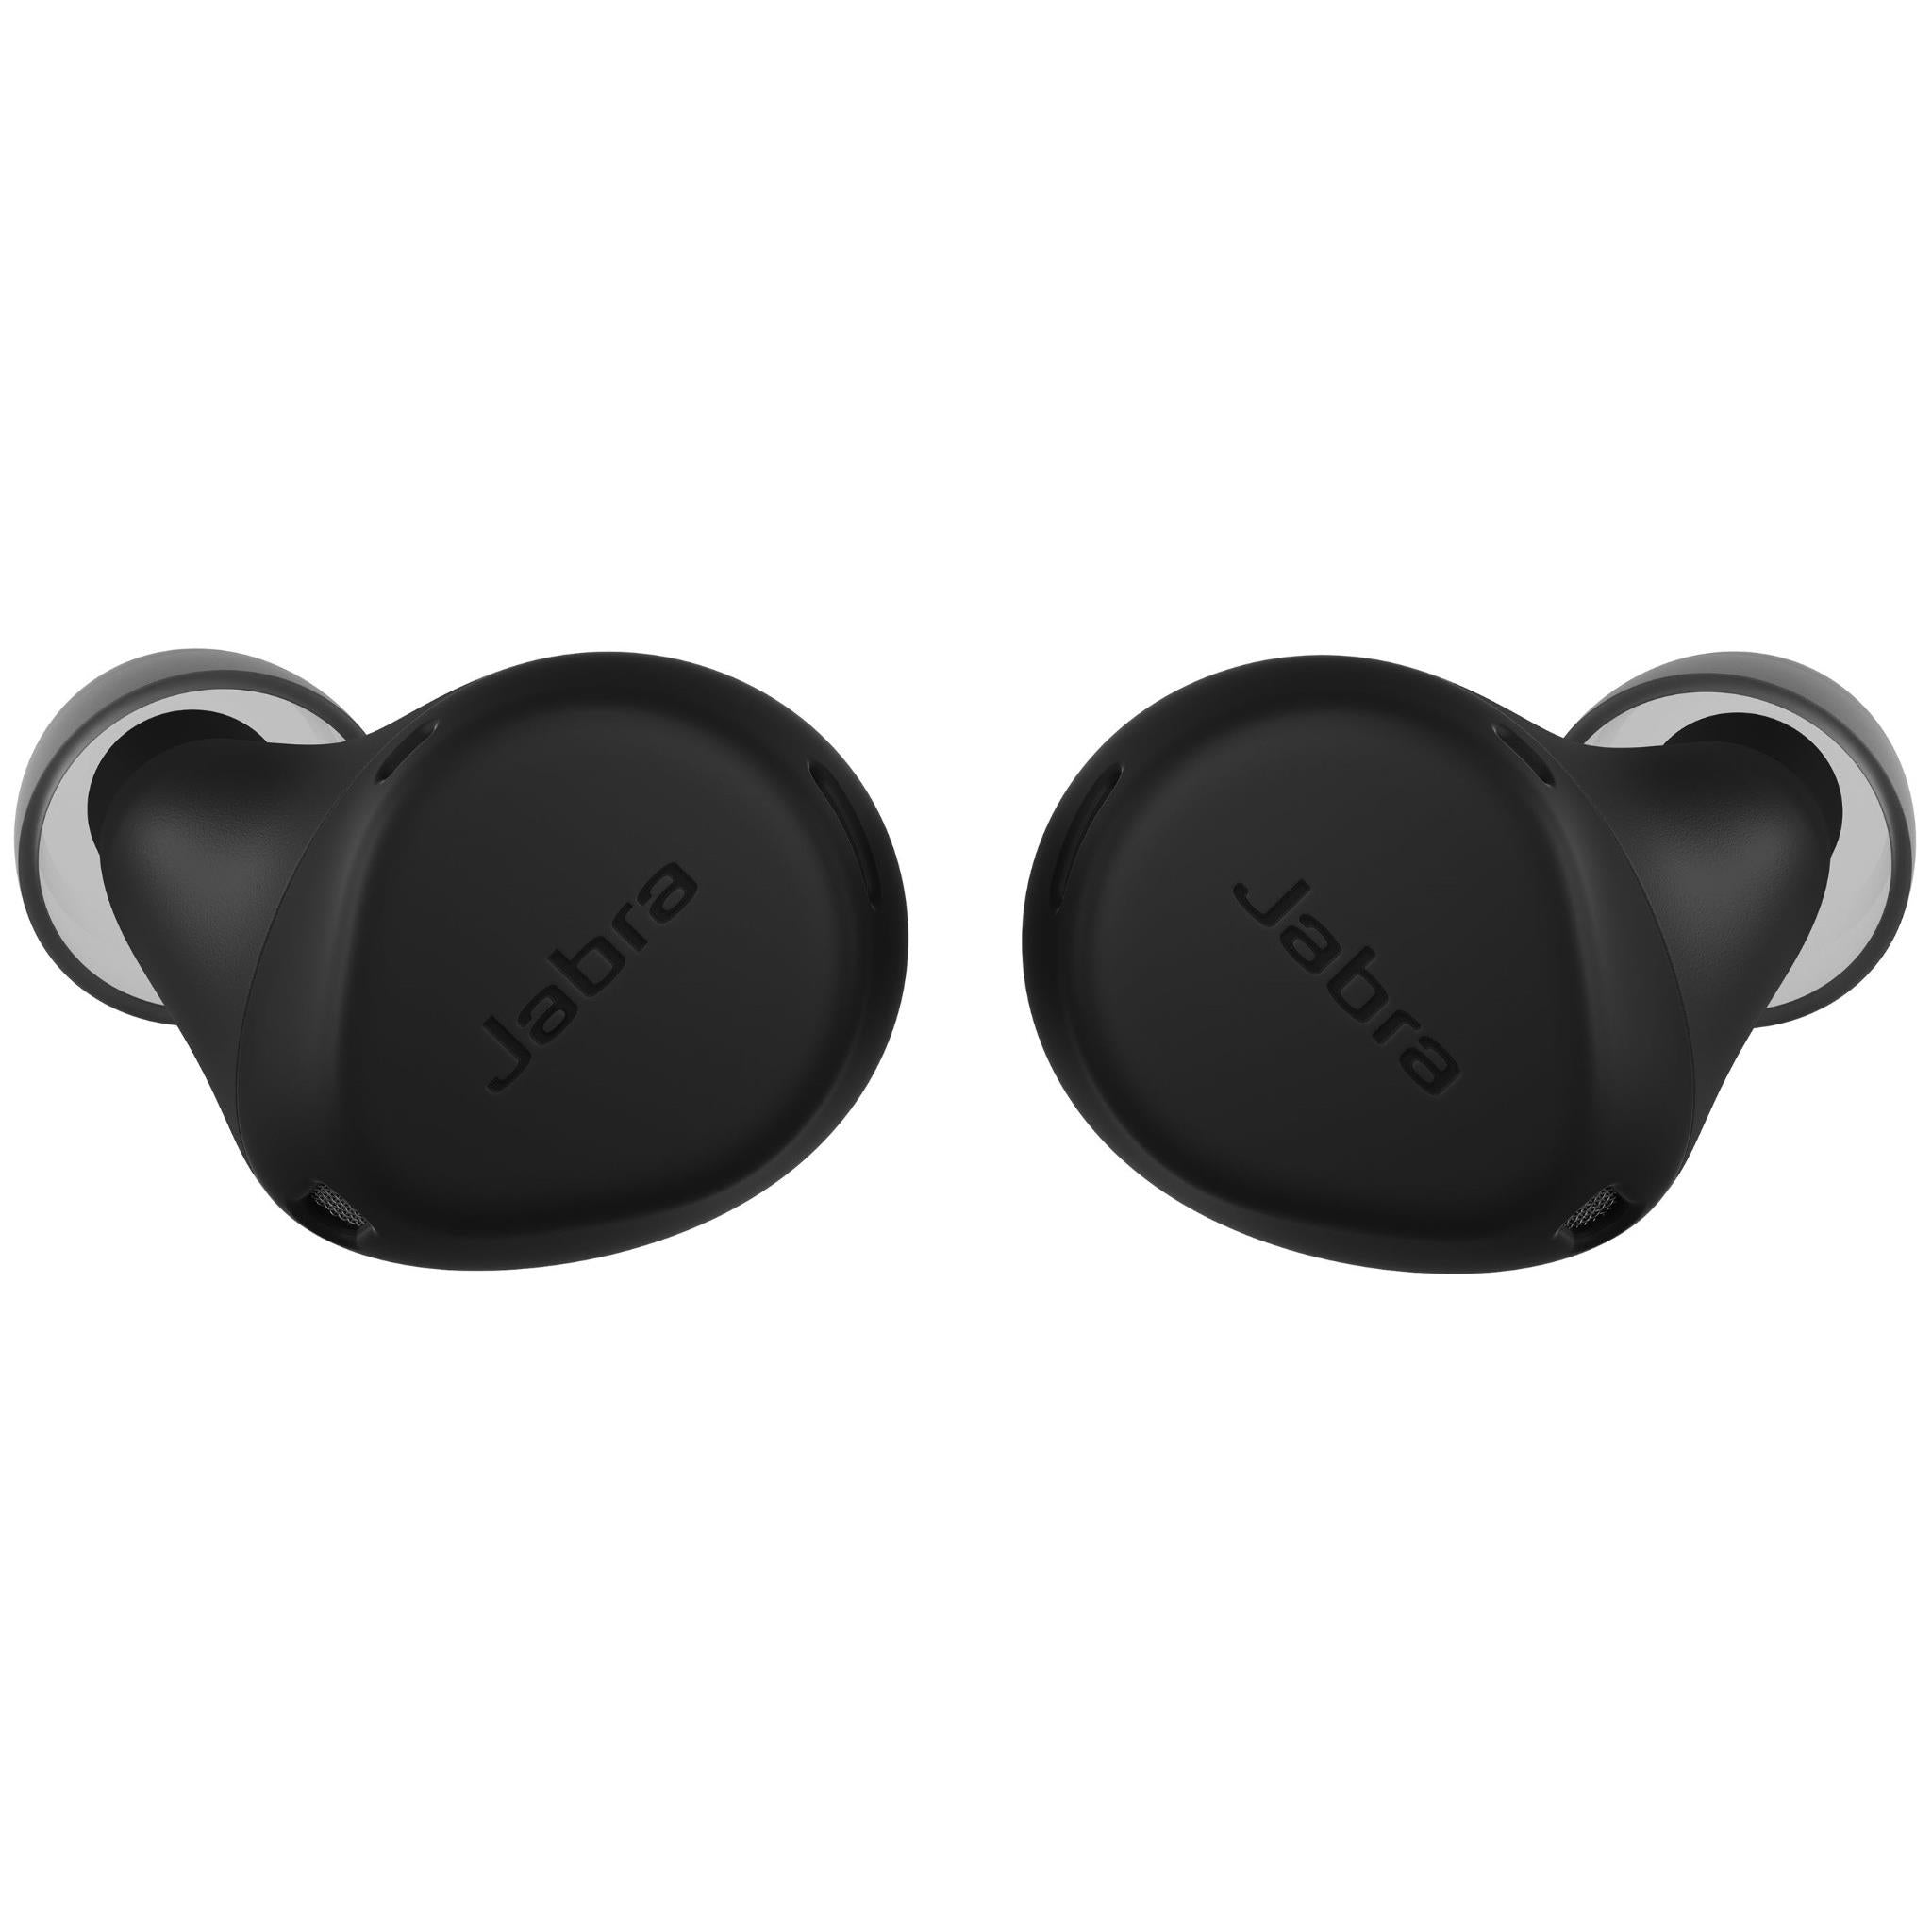 jabra elite 7 active anc true wireless in-ear headphones (black)